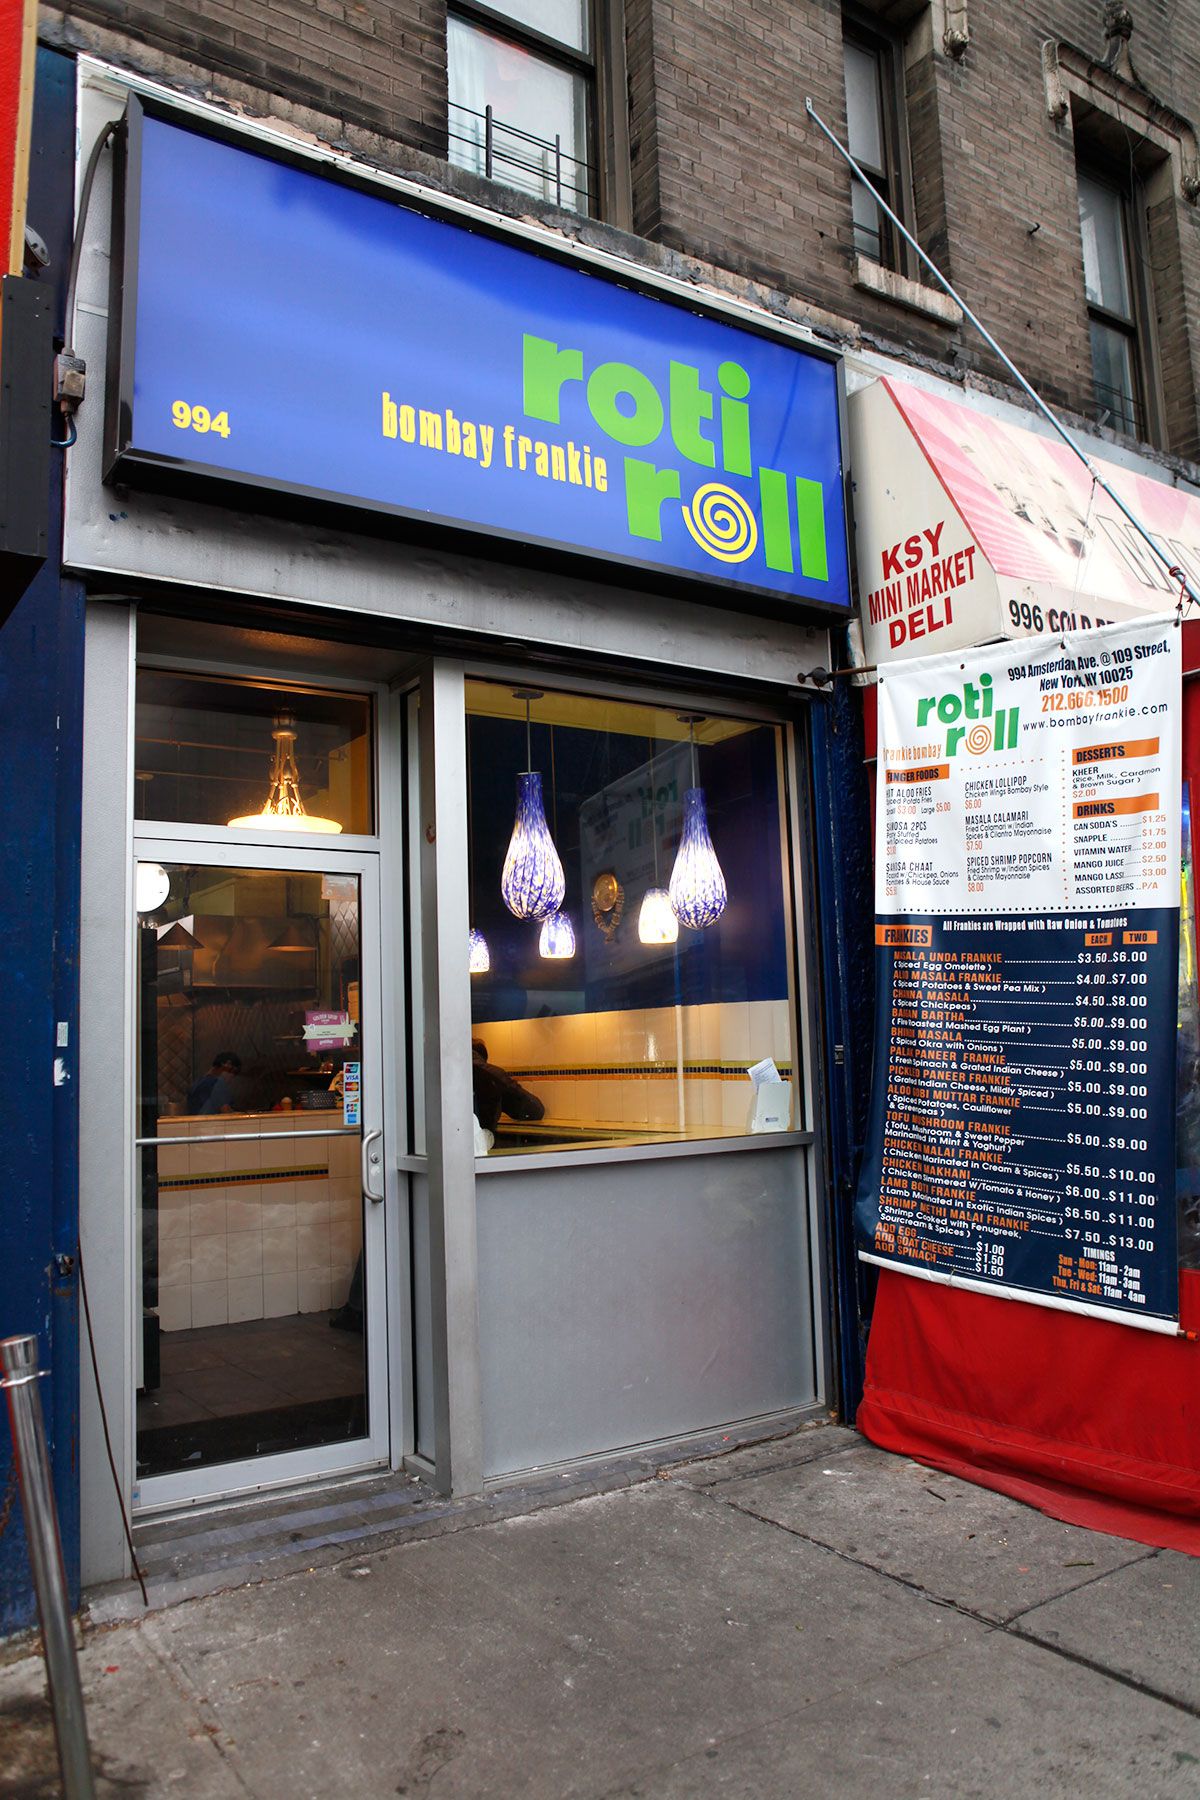 Roti Roll Bombay Frankie